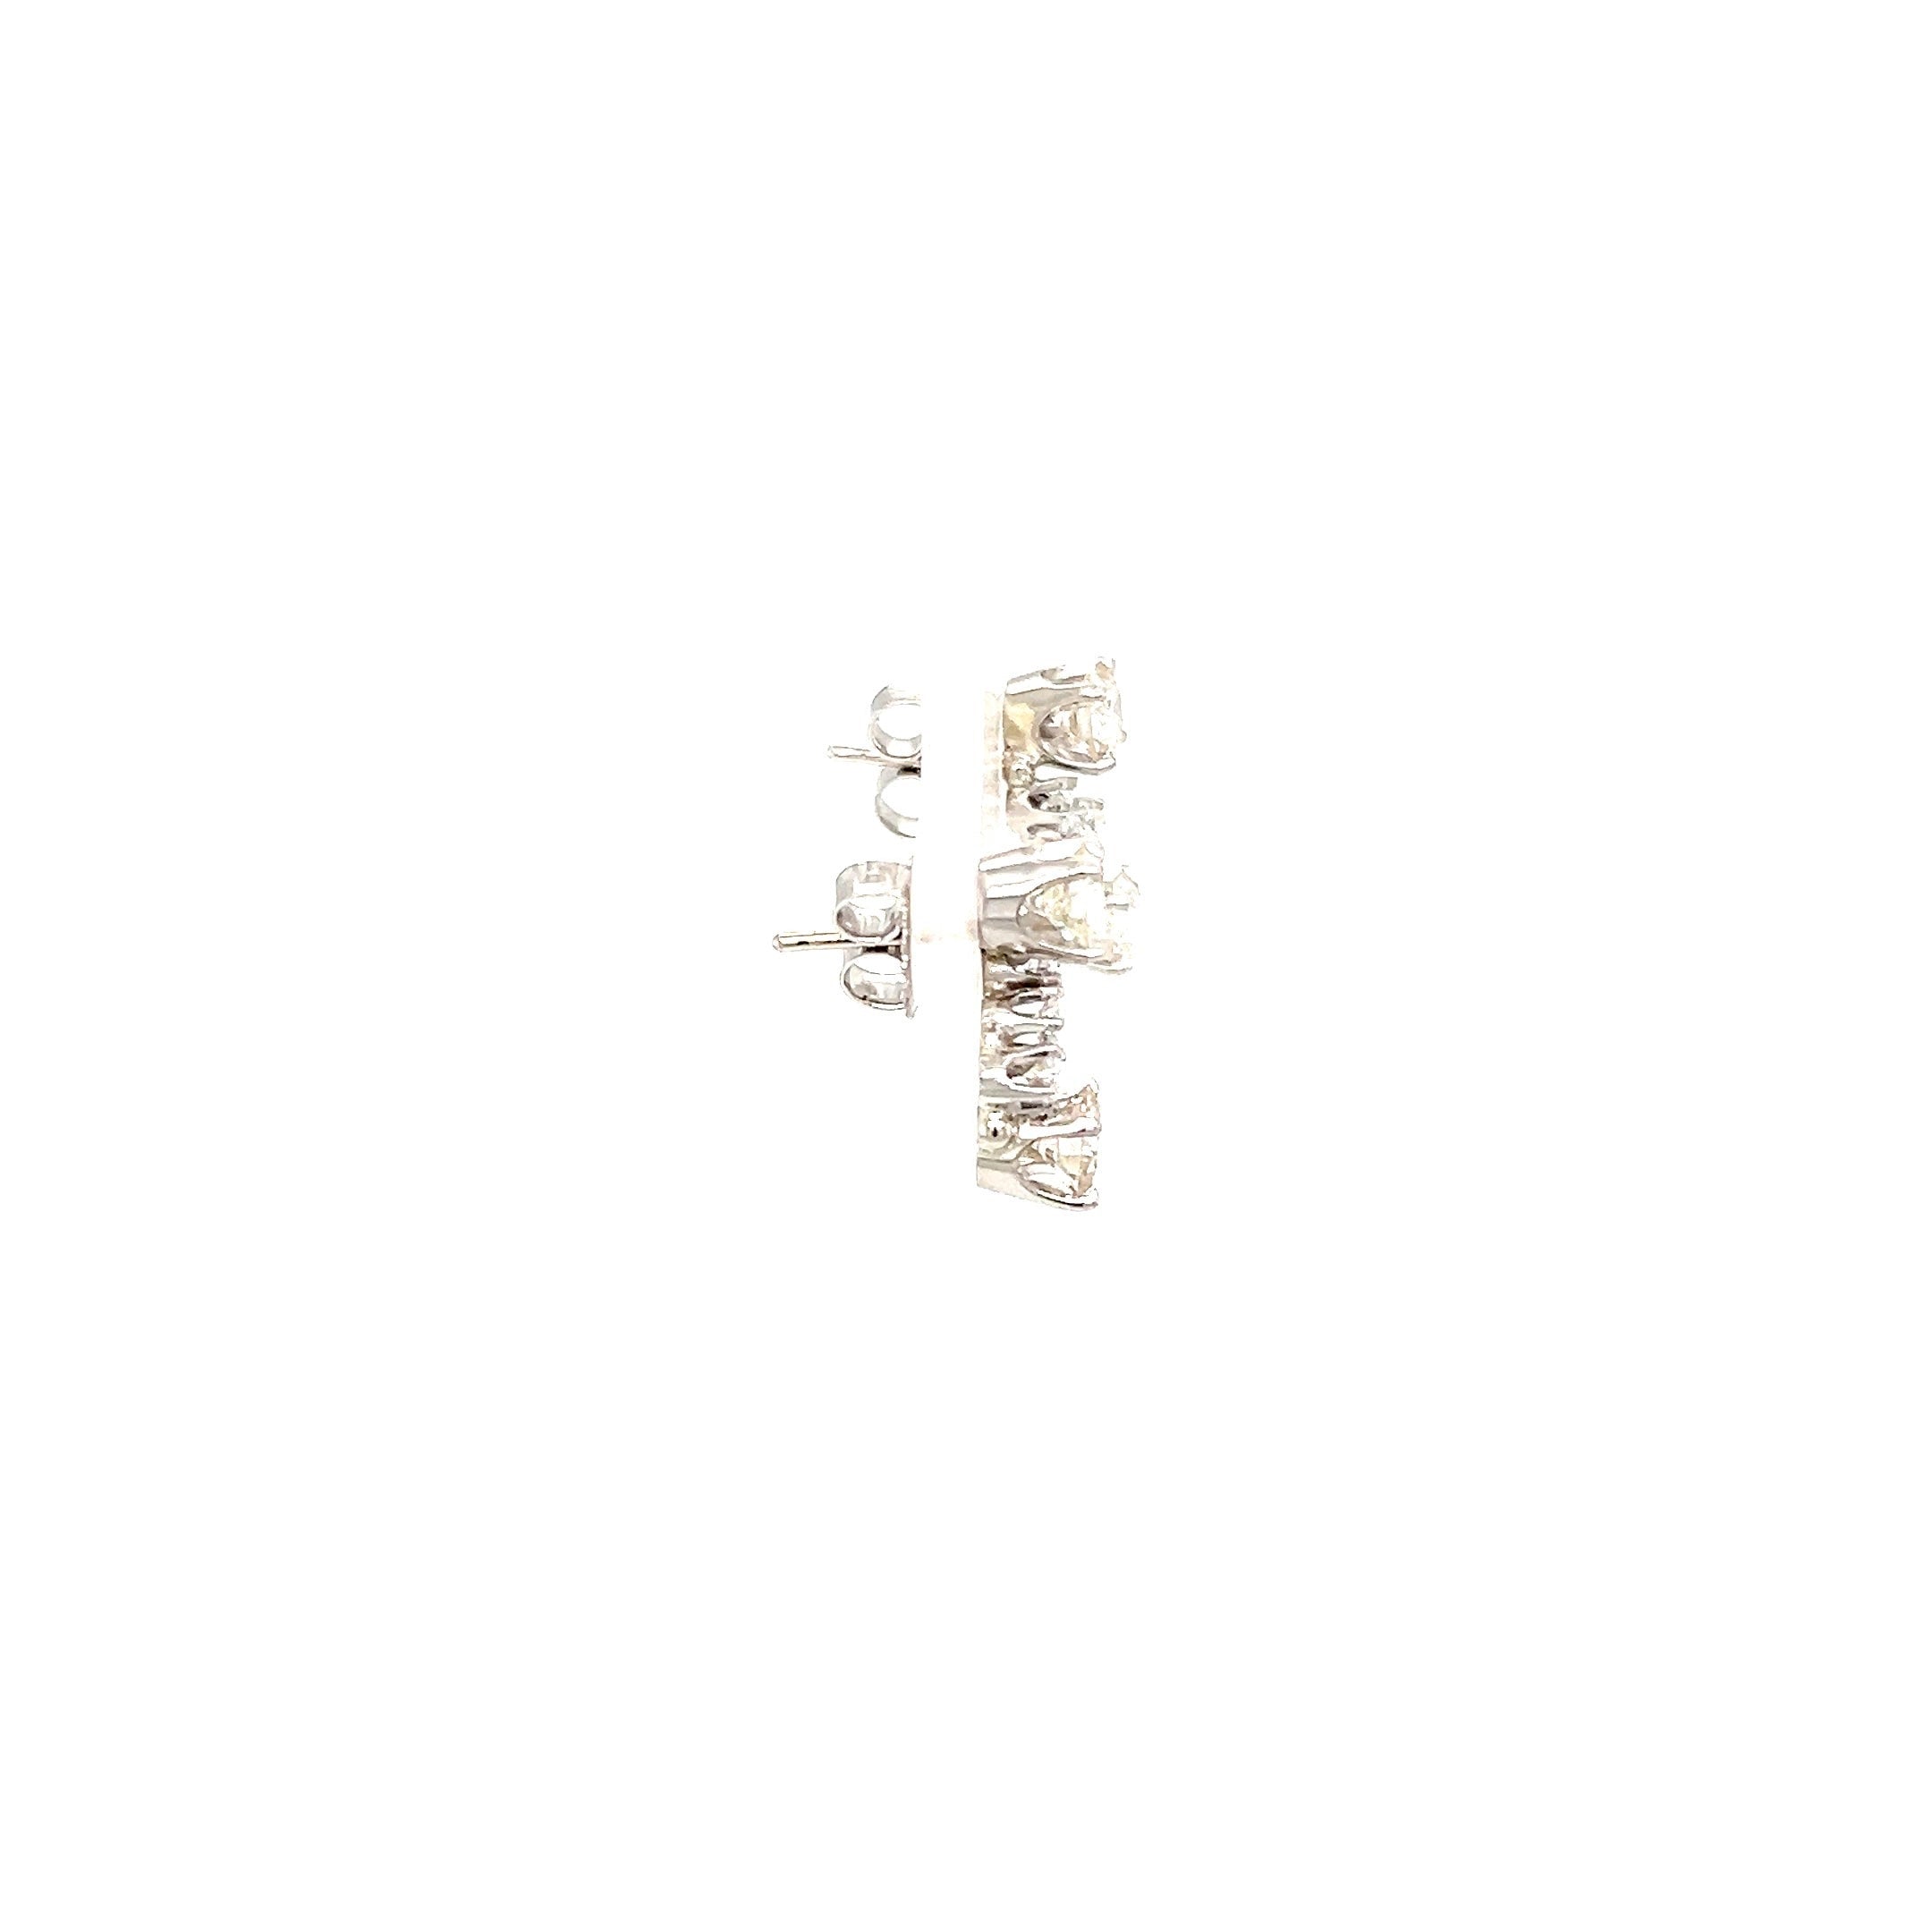 White Gold 14k Diamond Earrings | I&I Diamonds in Coconut Creek, FL